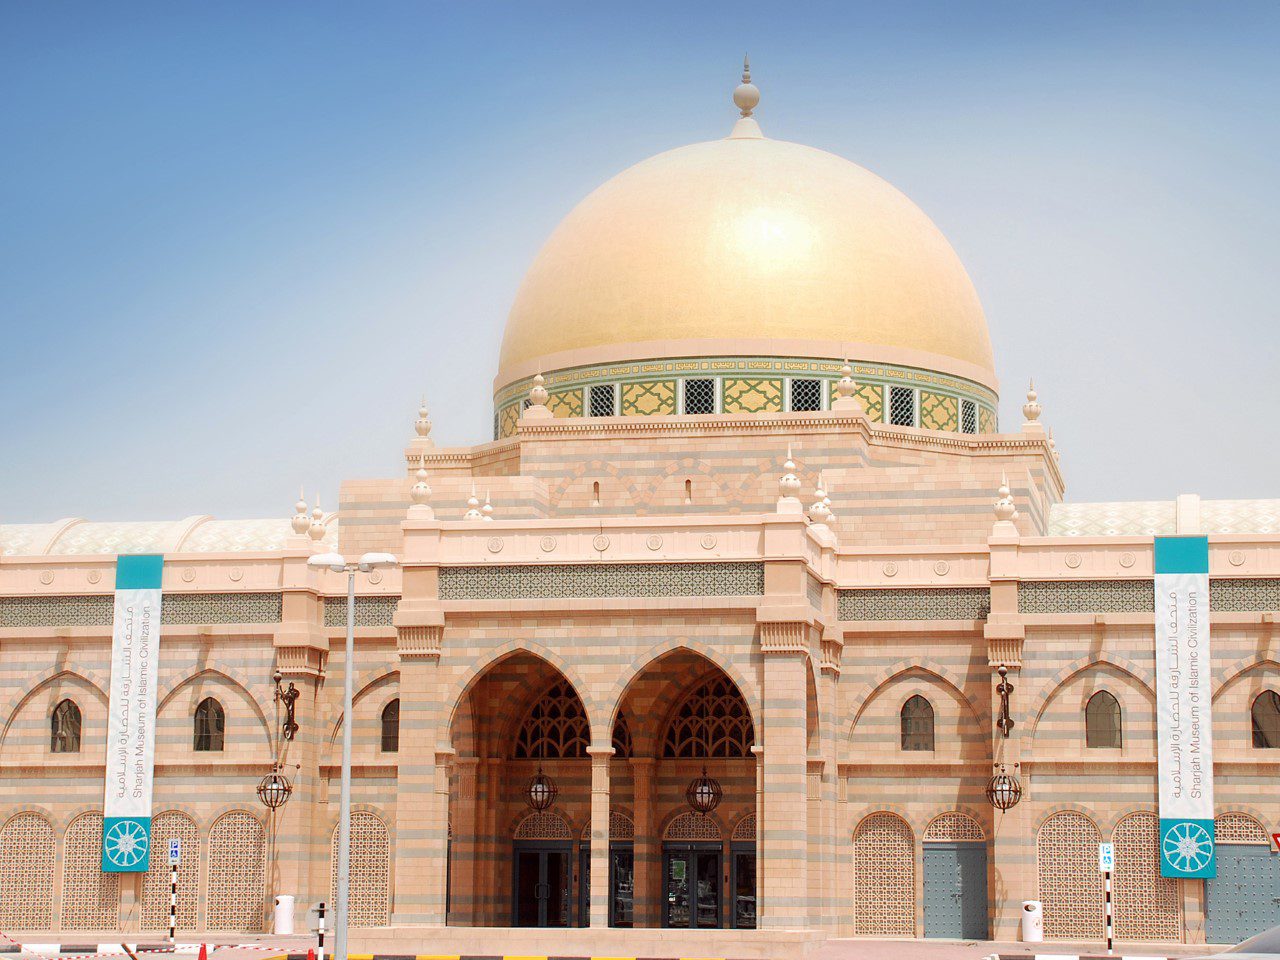 The Museum of Islamic Civilizations